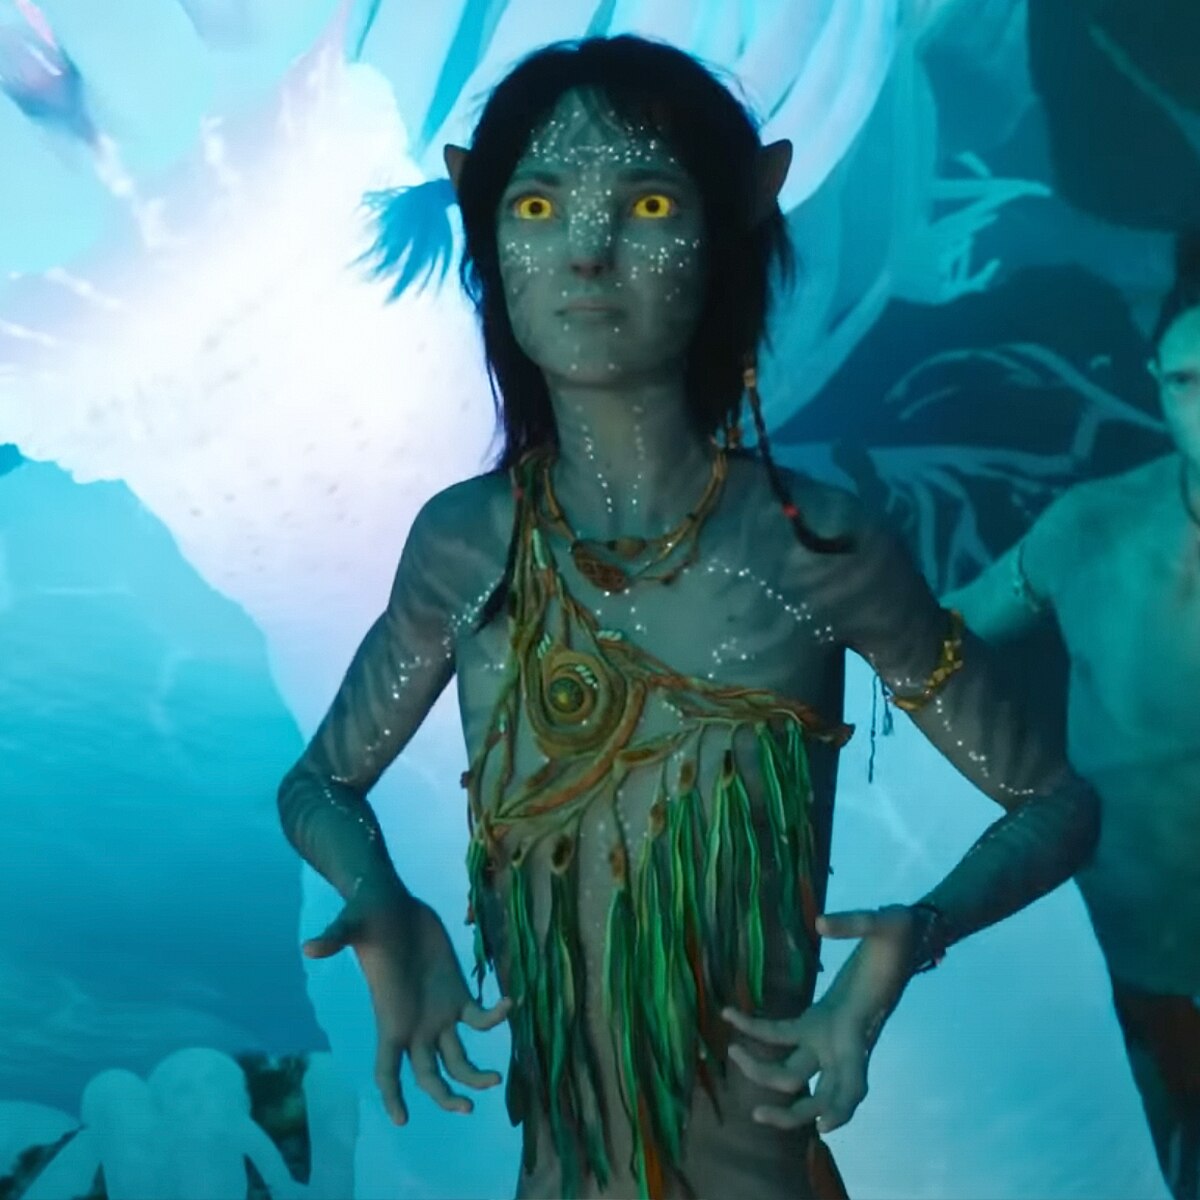 Avatar The Way of Water team on creating its striking underwater world